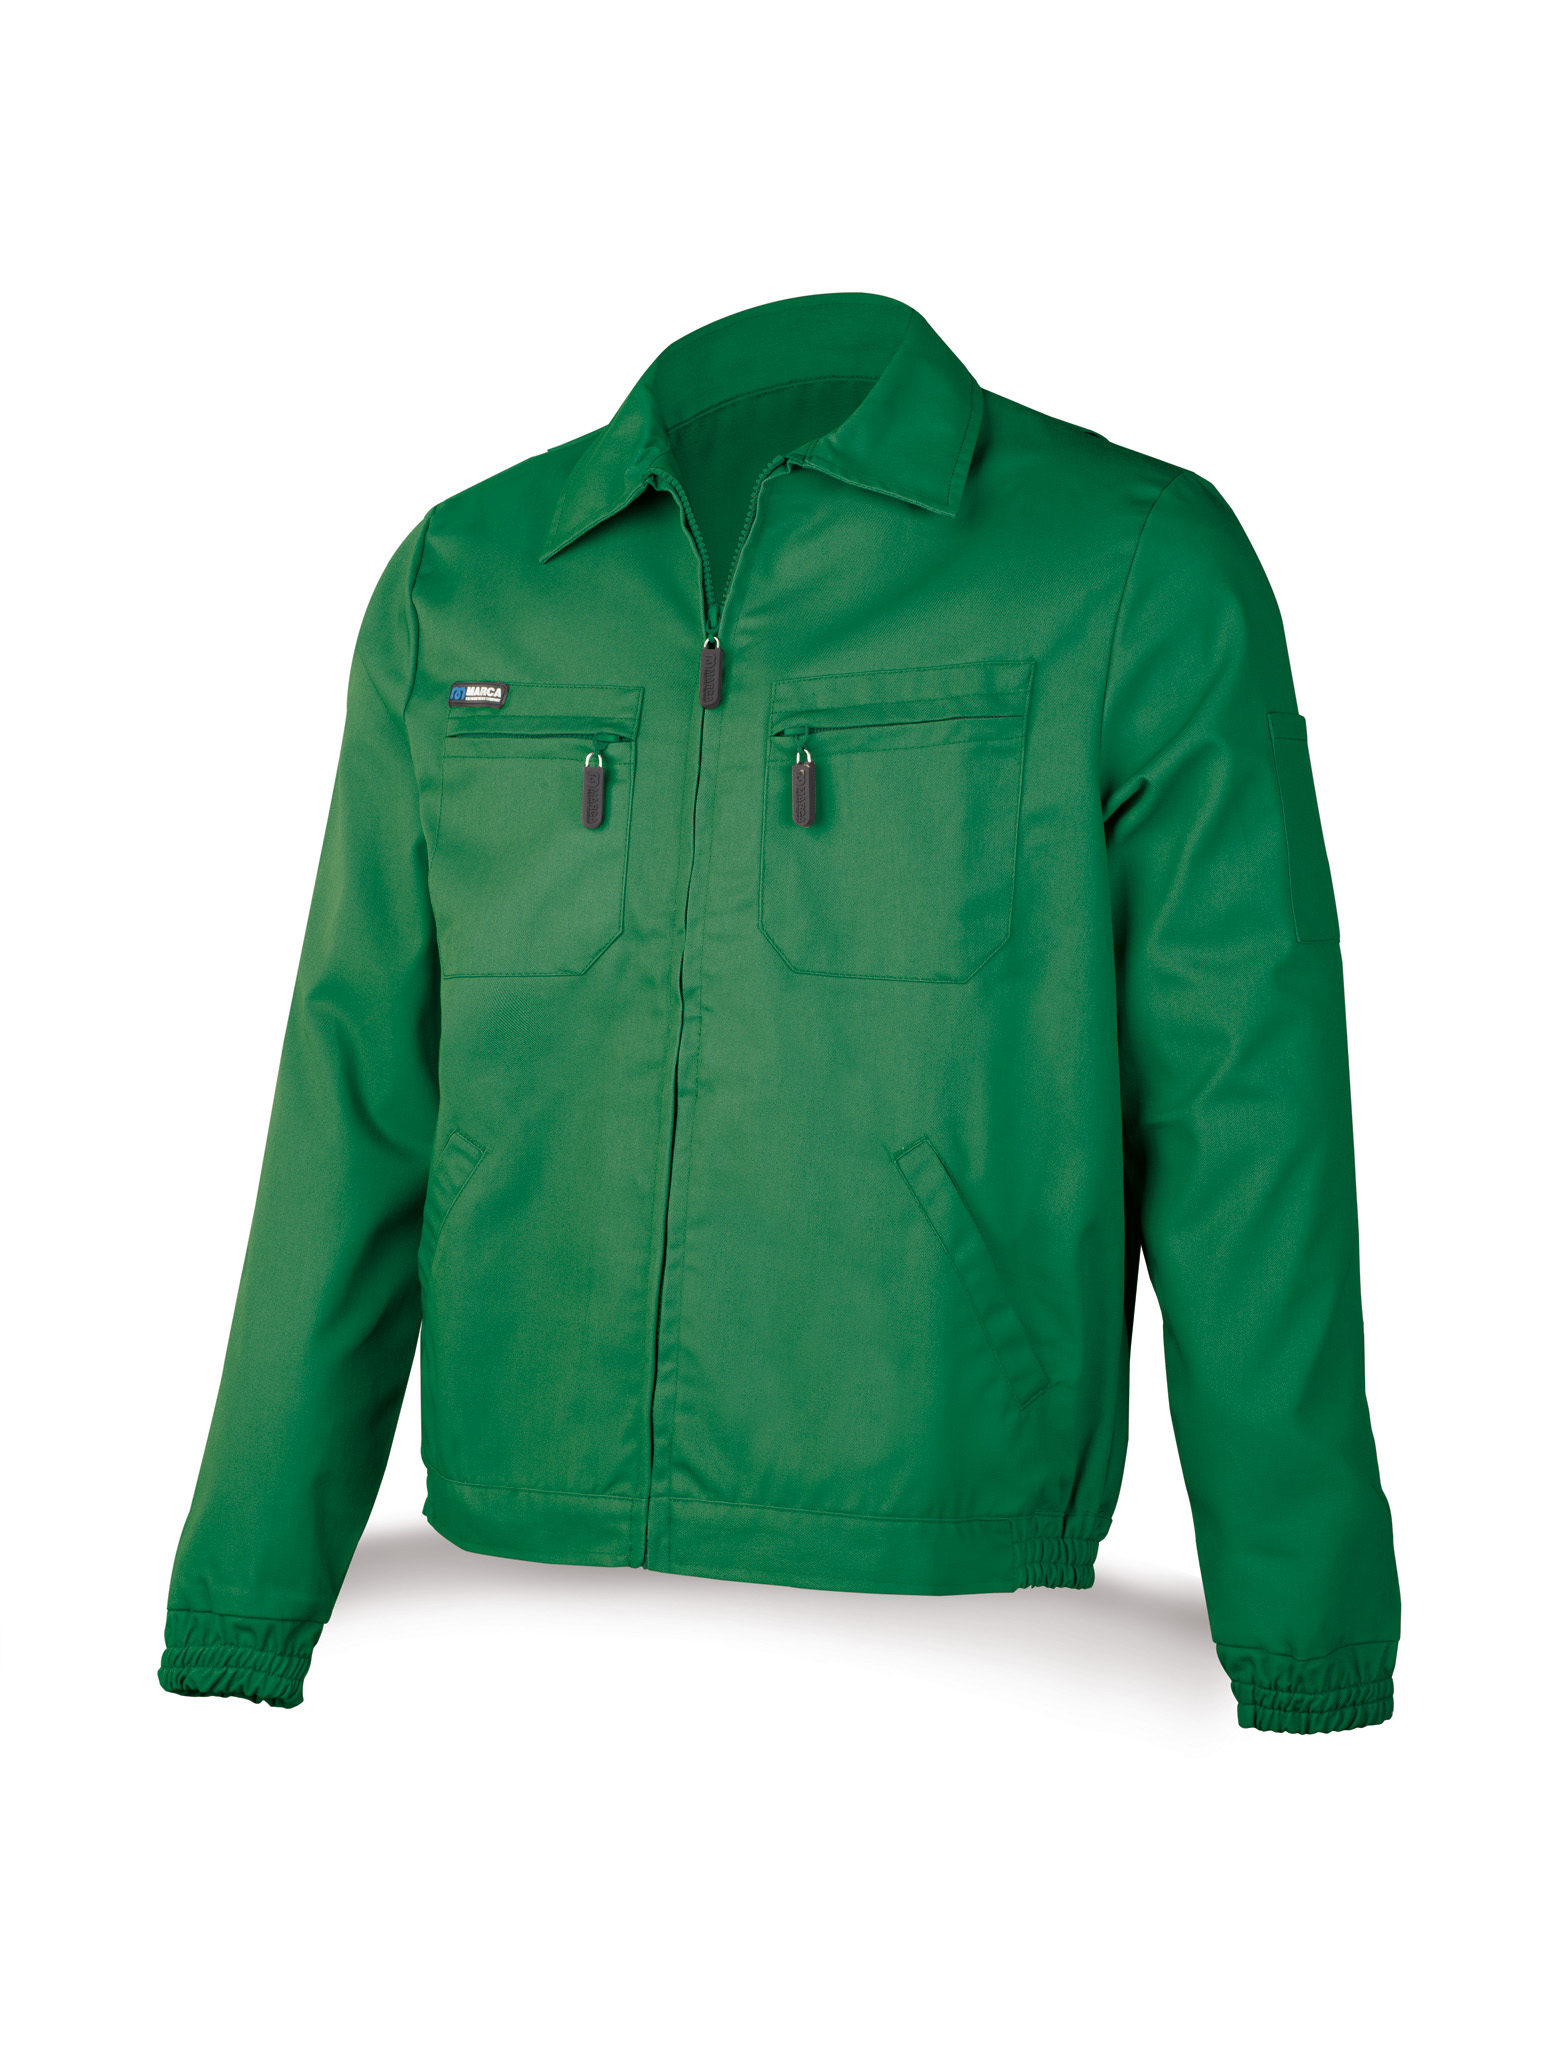 488-CV Top Workwear Top Series Tergal. Green.